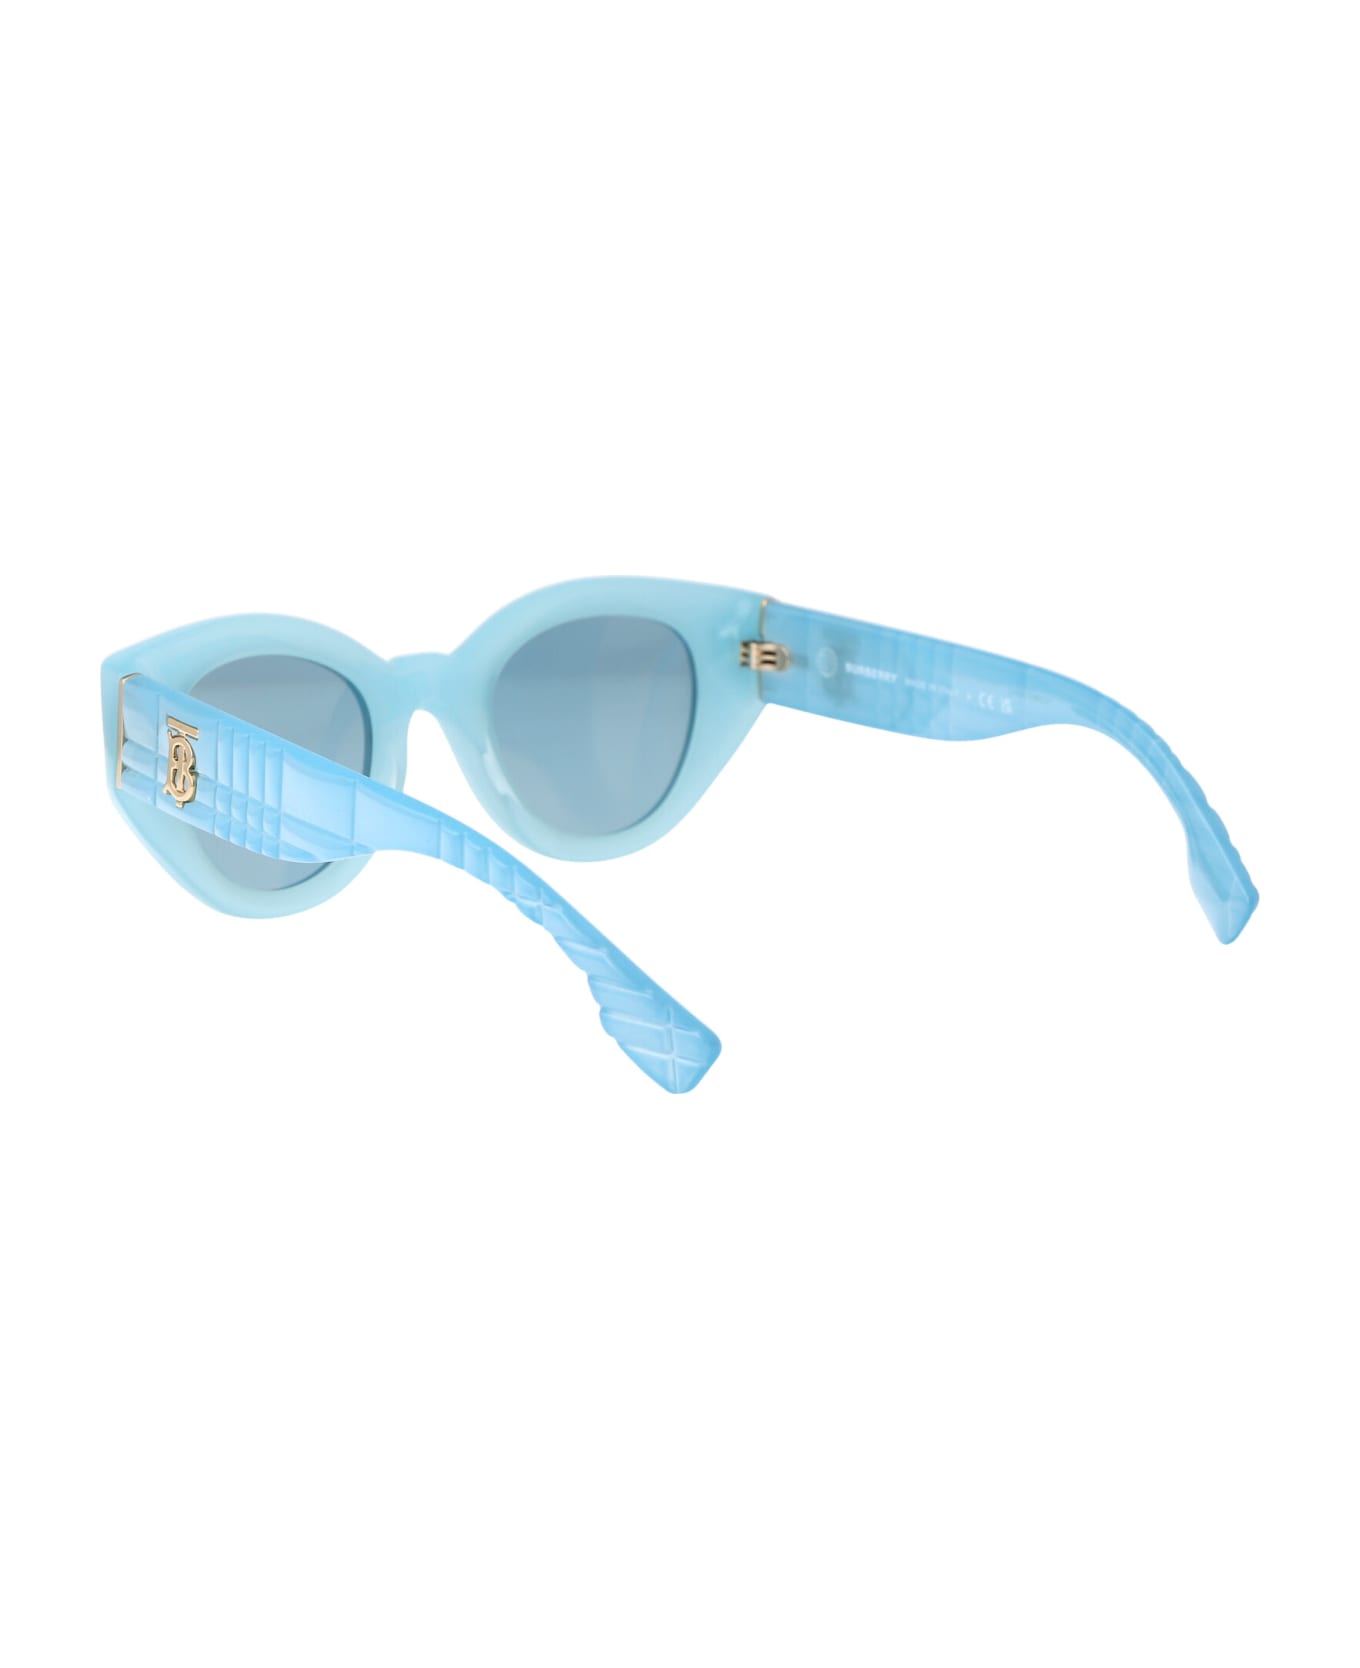 Burberry Eyewear Meadow Sunglasses - 408680 Azure